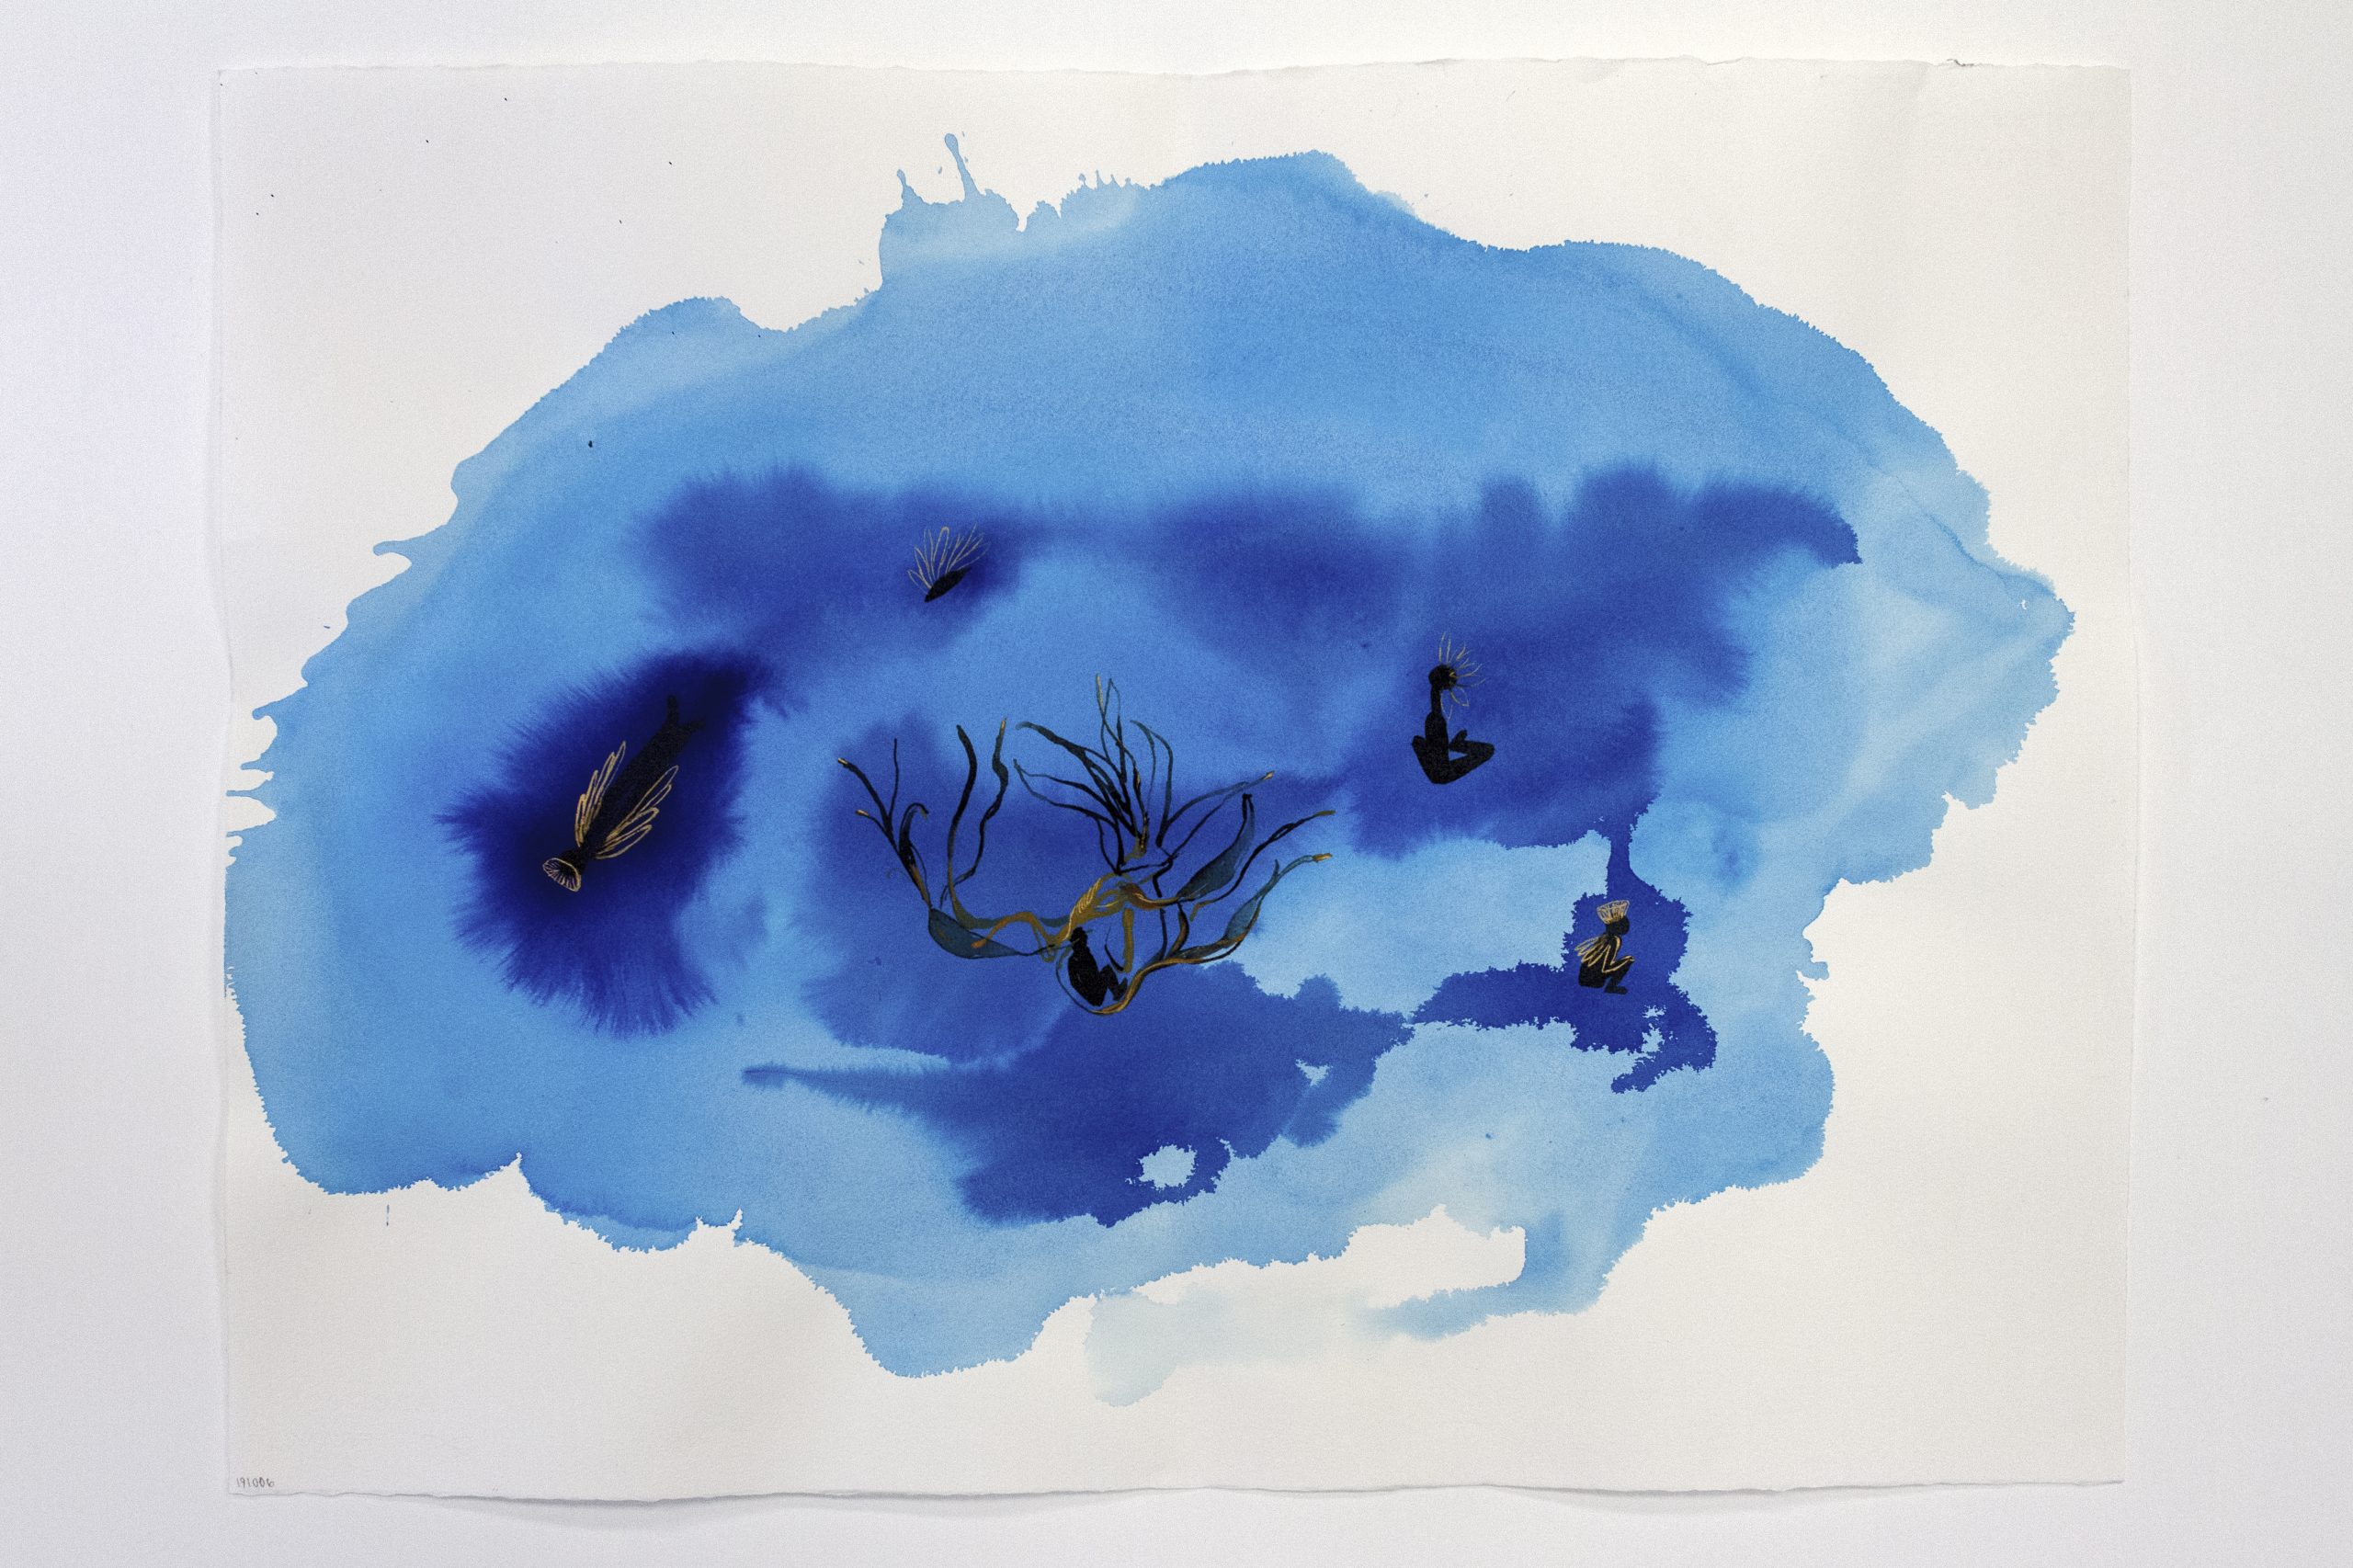 María Magdalena Campos Pons, Cinco Apariciones, 2019, from the series Un Pedazo de Mar, watercolor, ink and gouache on paper, 56.5 x 76 cm. Courtesy of the artist.